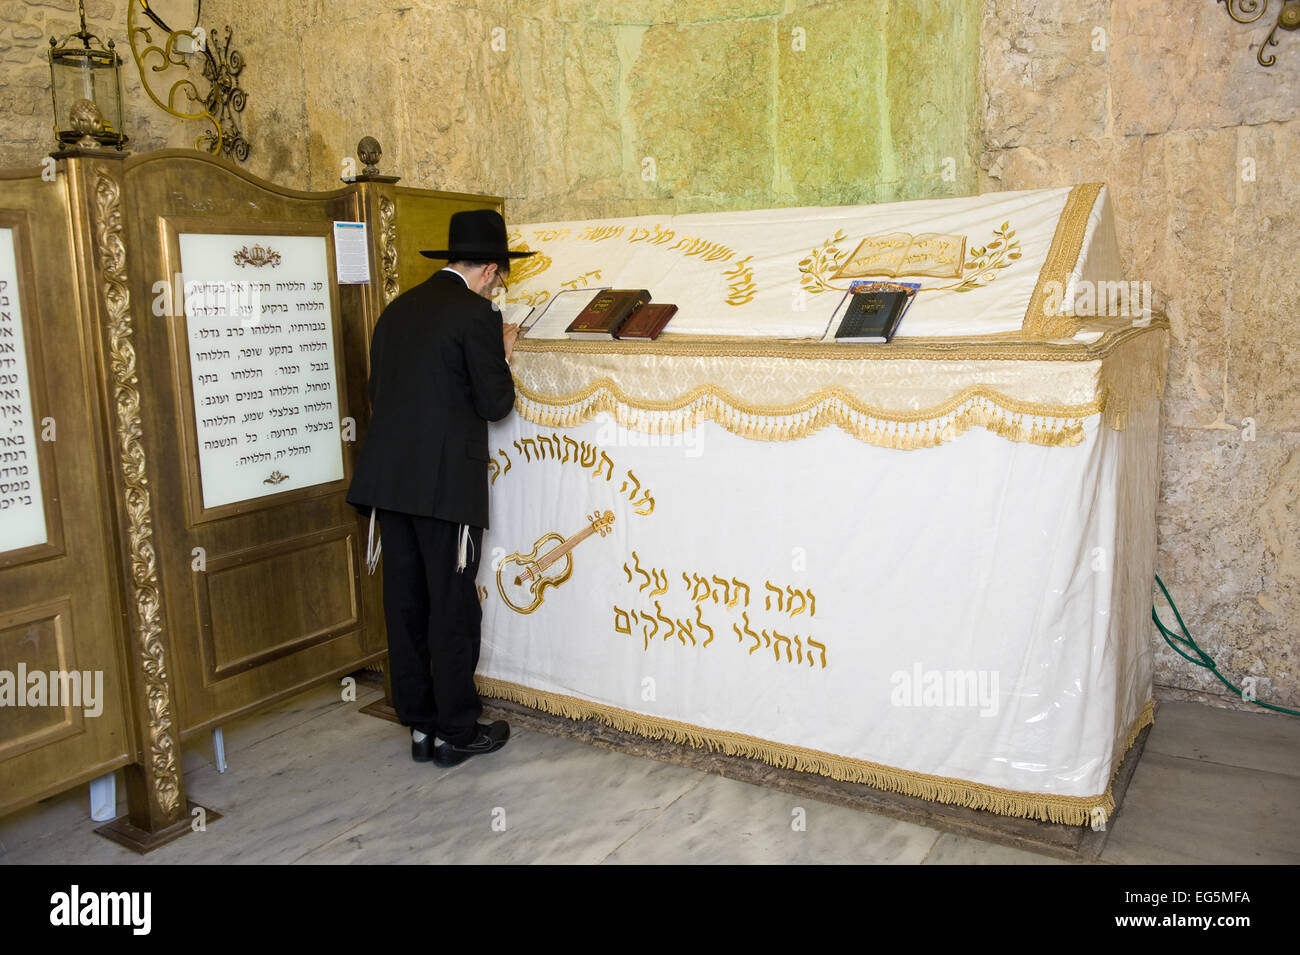 JERUSALEM, ISRAEL - 8. Oktober 2014: ein orthodoxer Jude betet am Grab des König David auf dem Berg Zion in Jerusalem Stockfoto